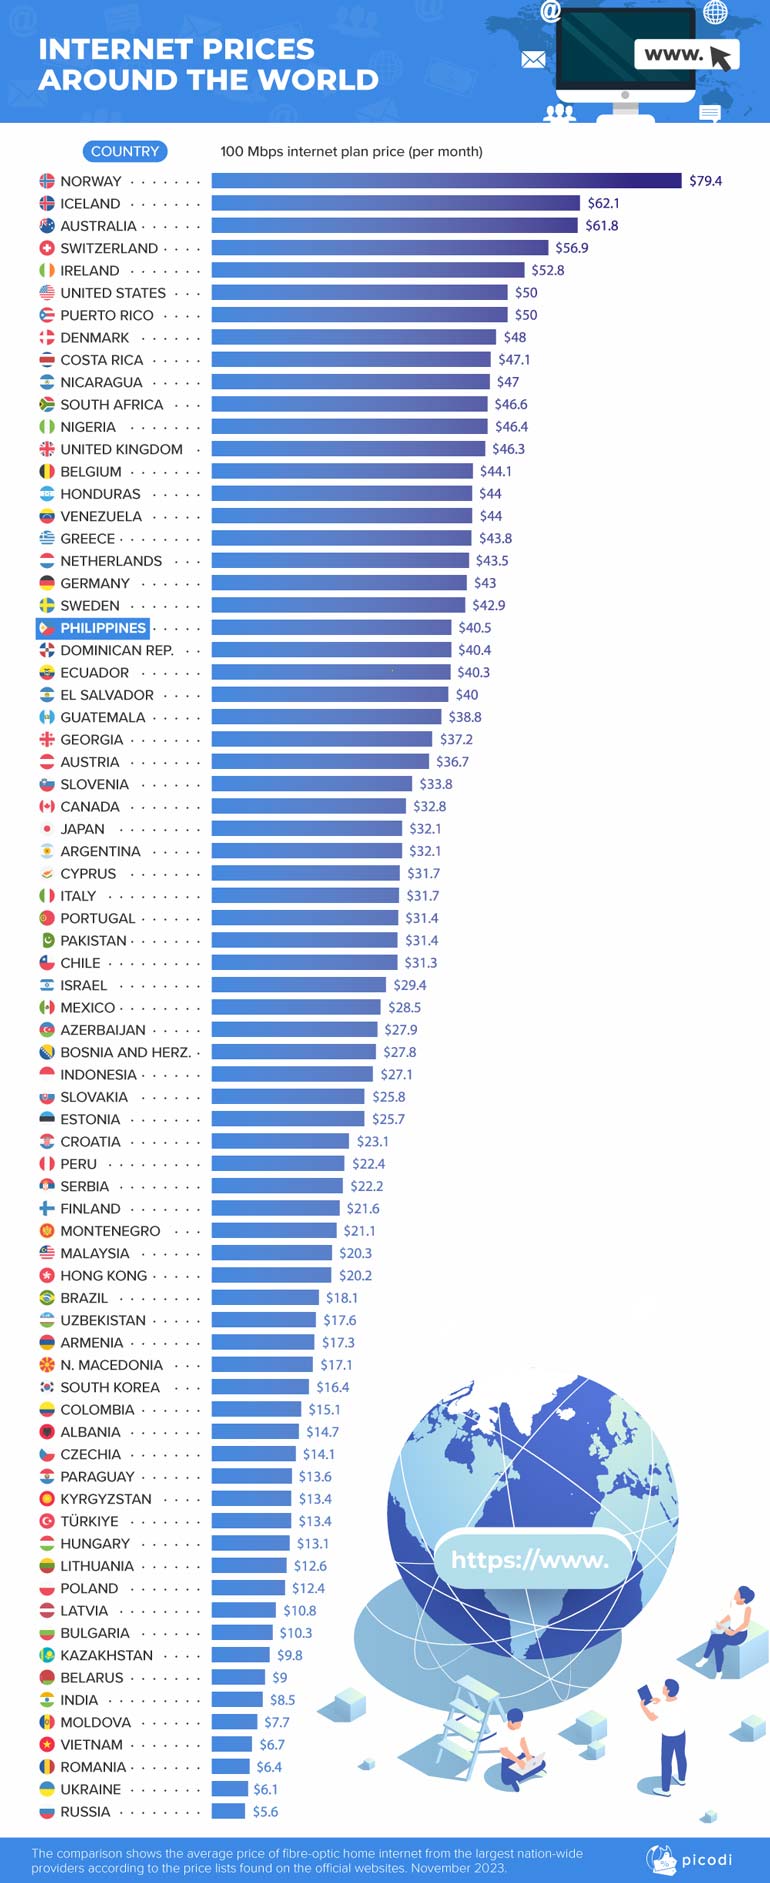 Picodi Internet Prices Around the World